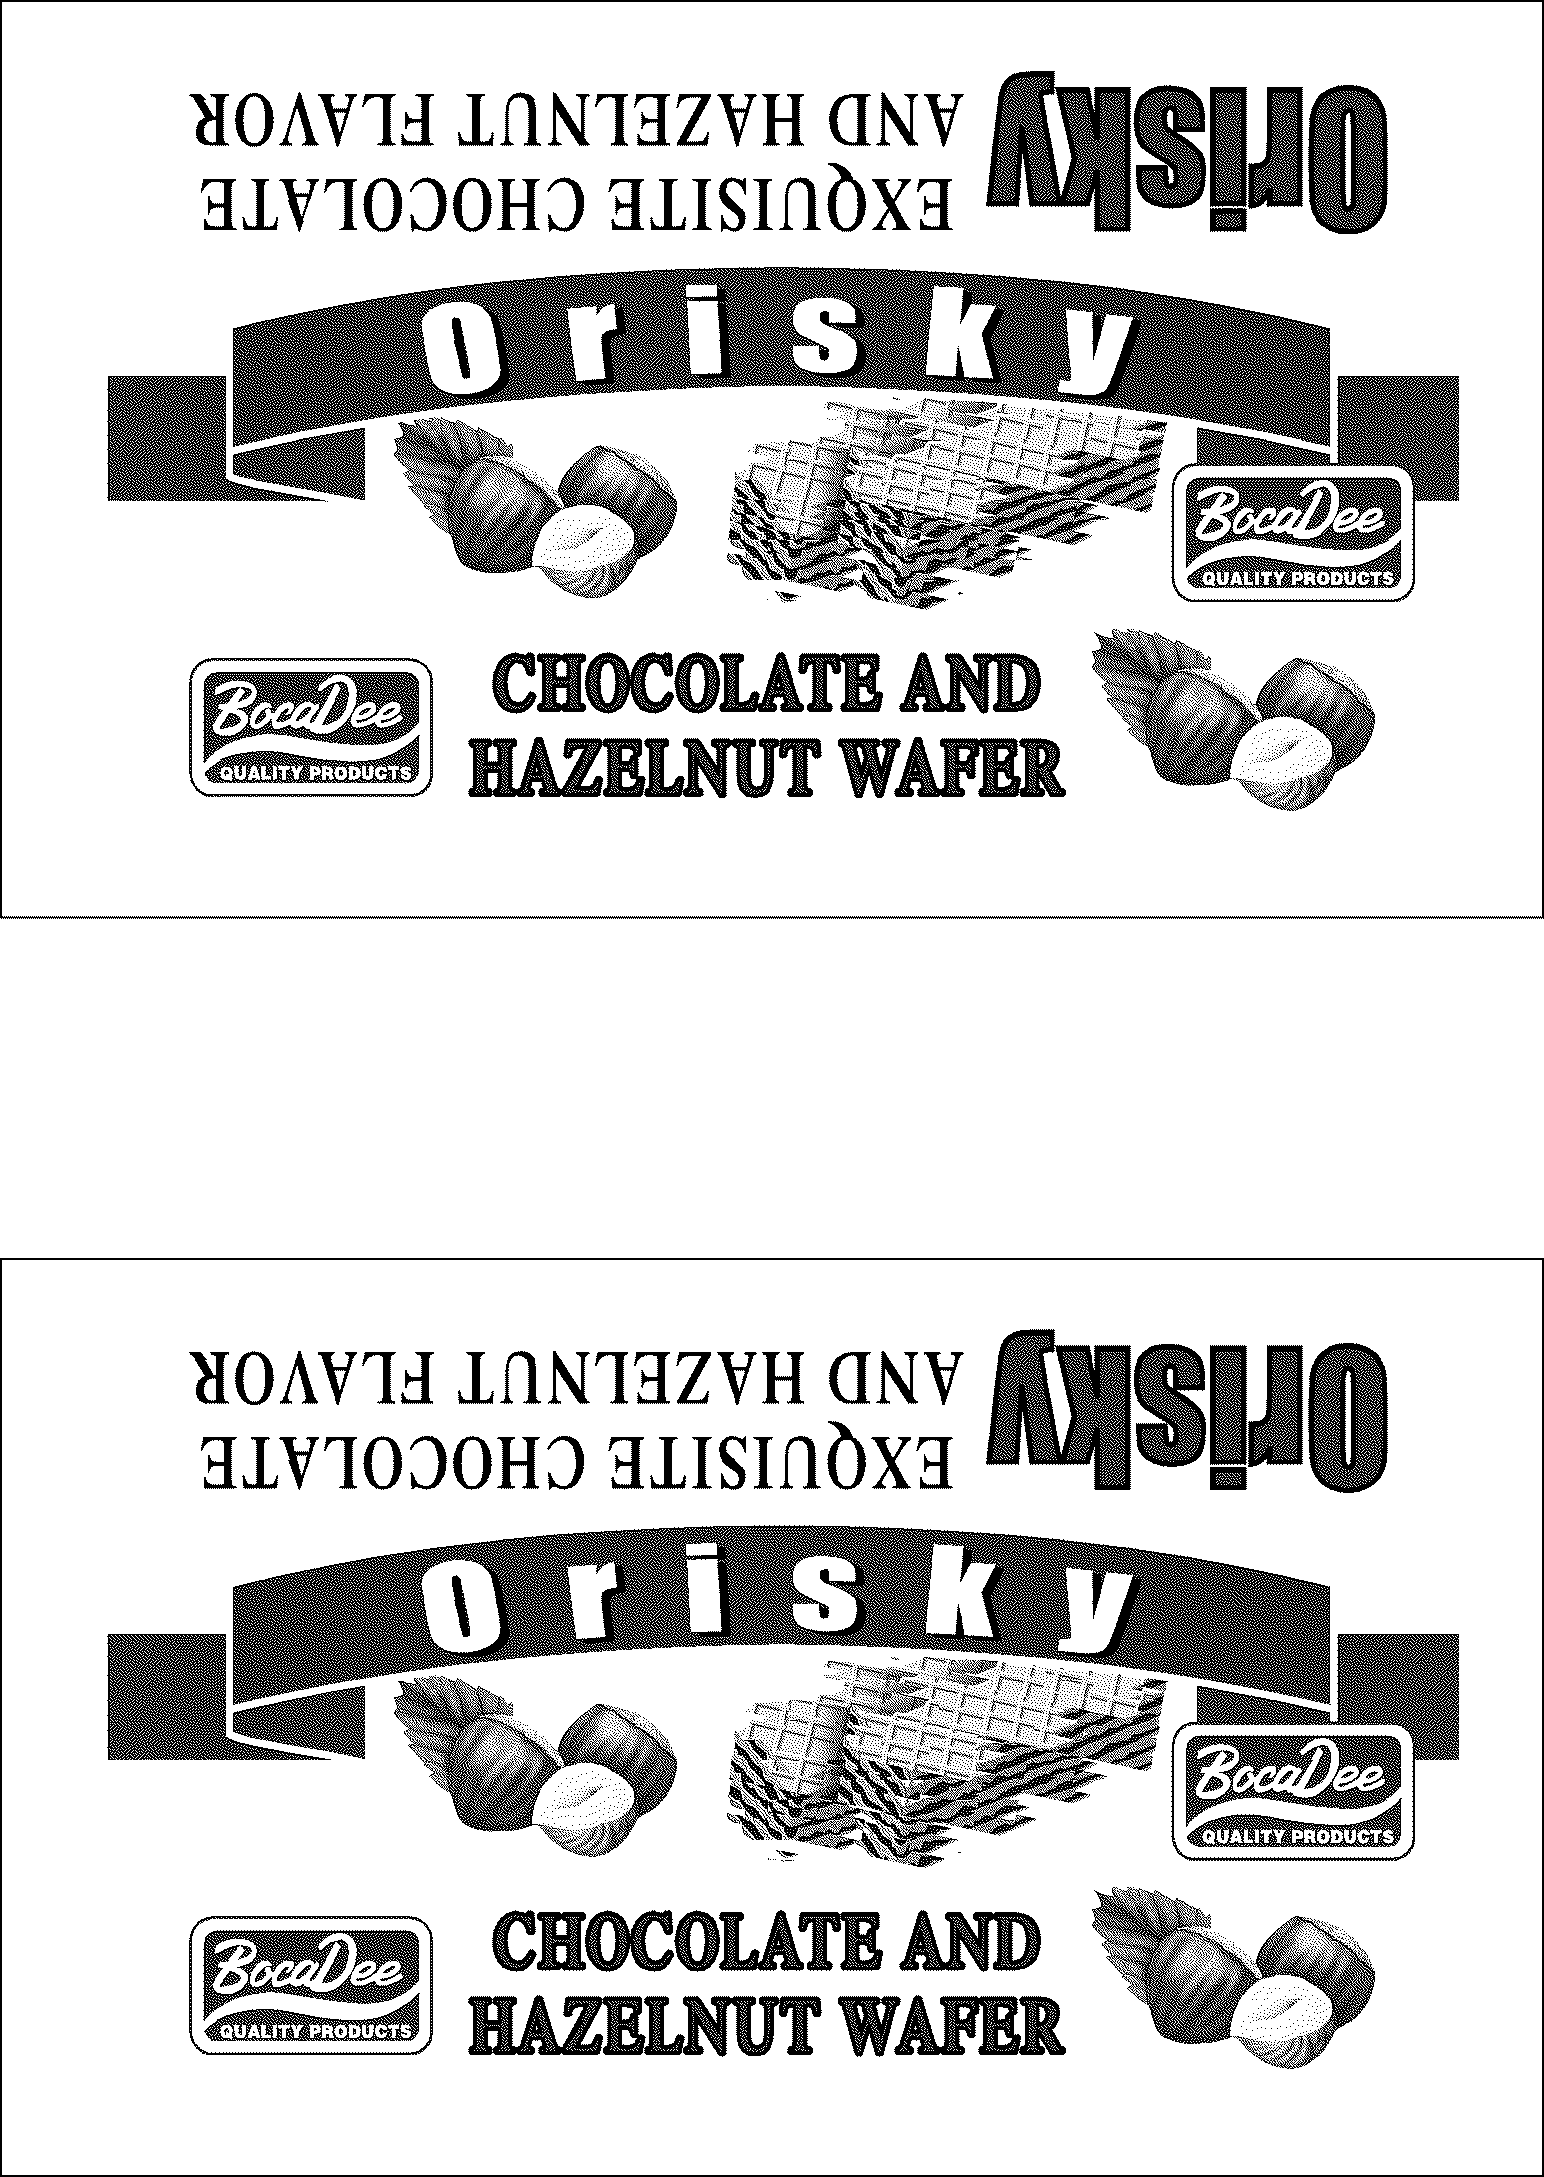  ORISKY CHOCOLATE AND HAZELNUT FLAVOR